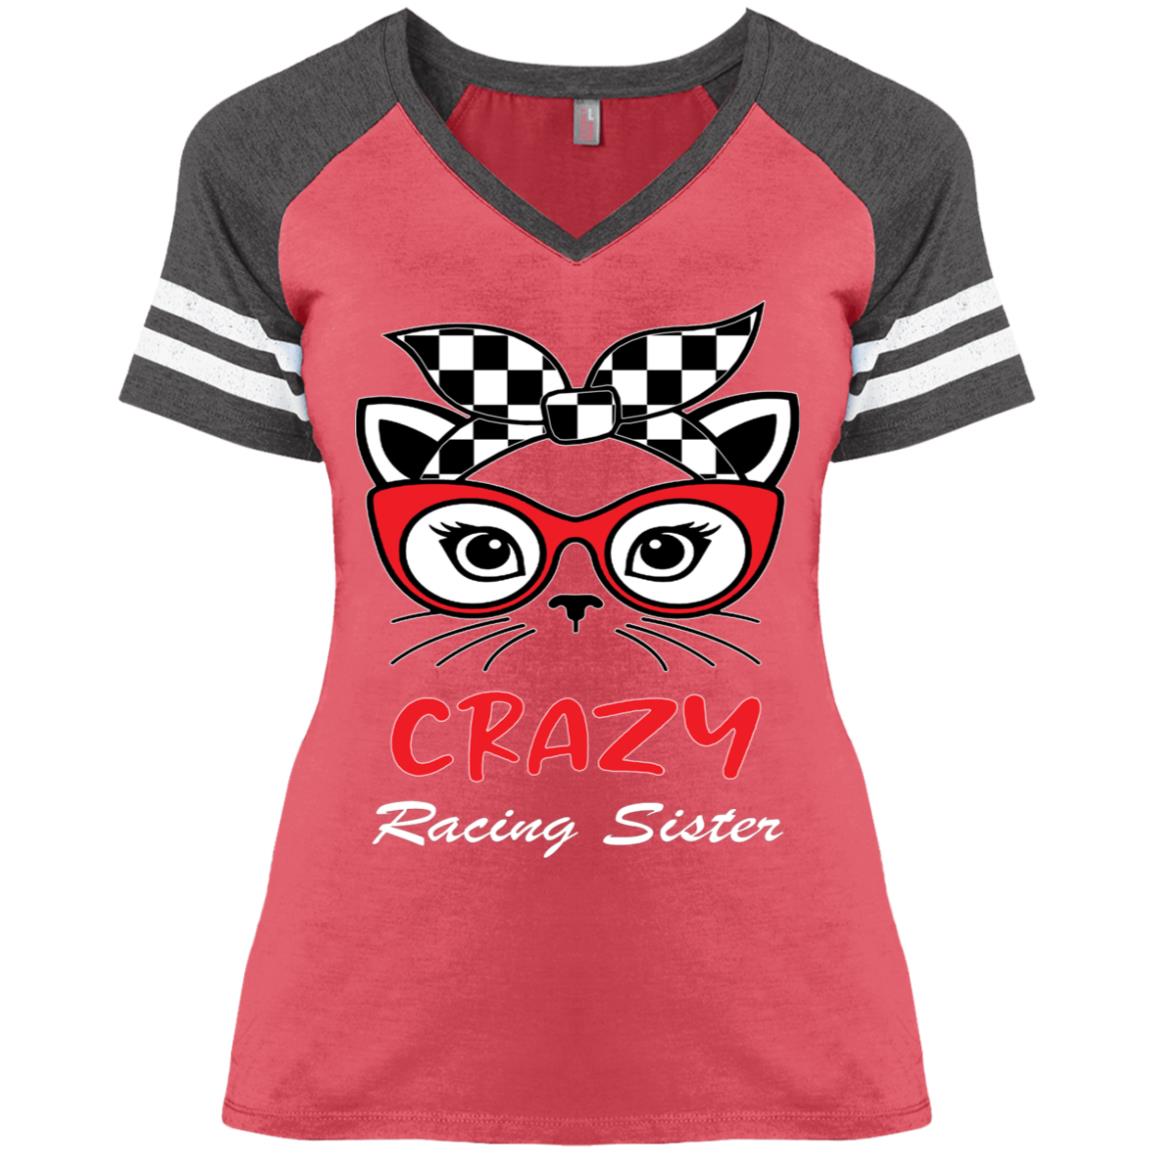 Crazy Racing Sister Ladies' Game V-Neck T-Shirt